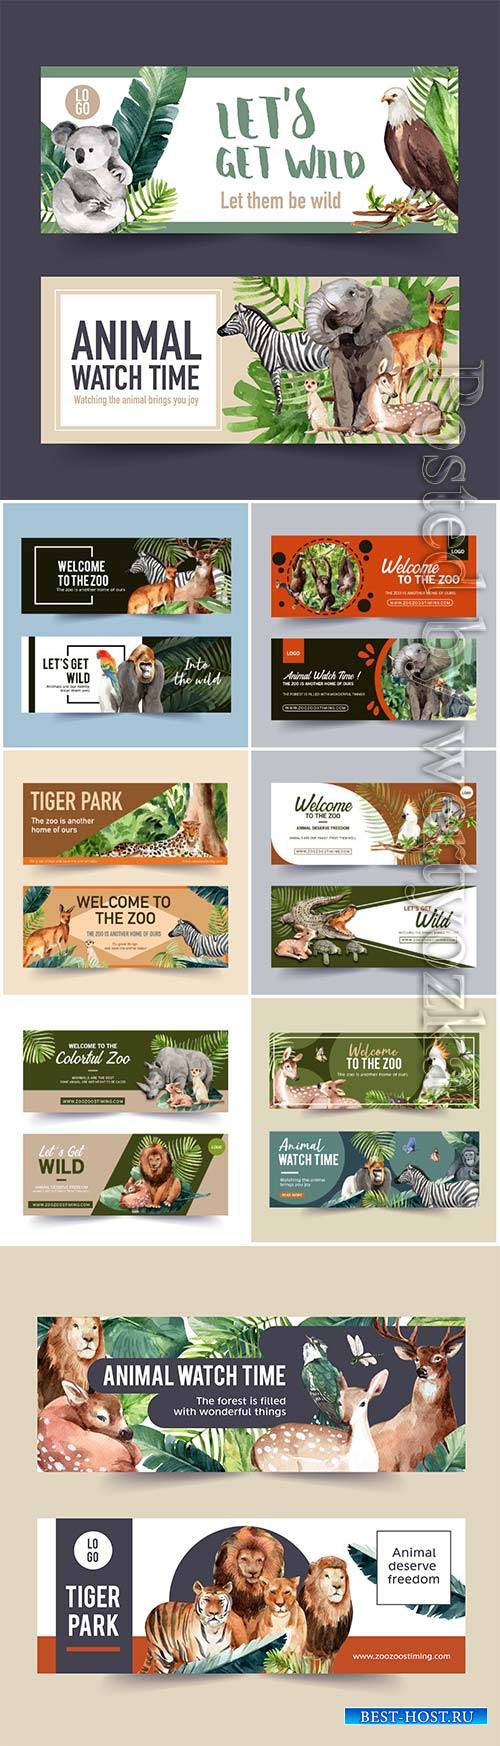 Zoo banner design with tiger, lion, deer watercolor illustration